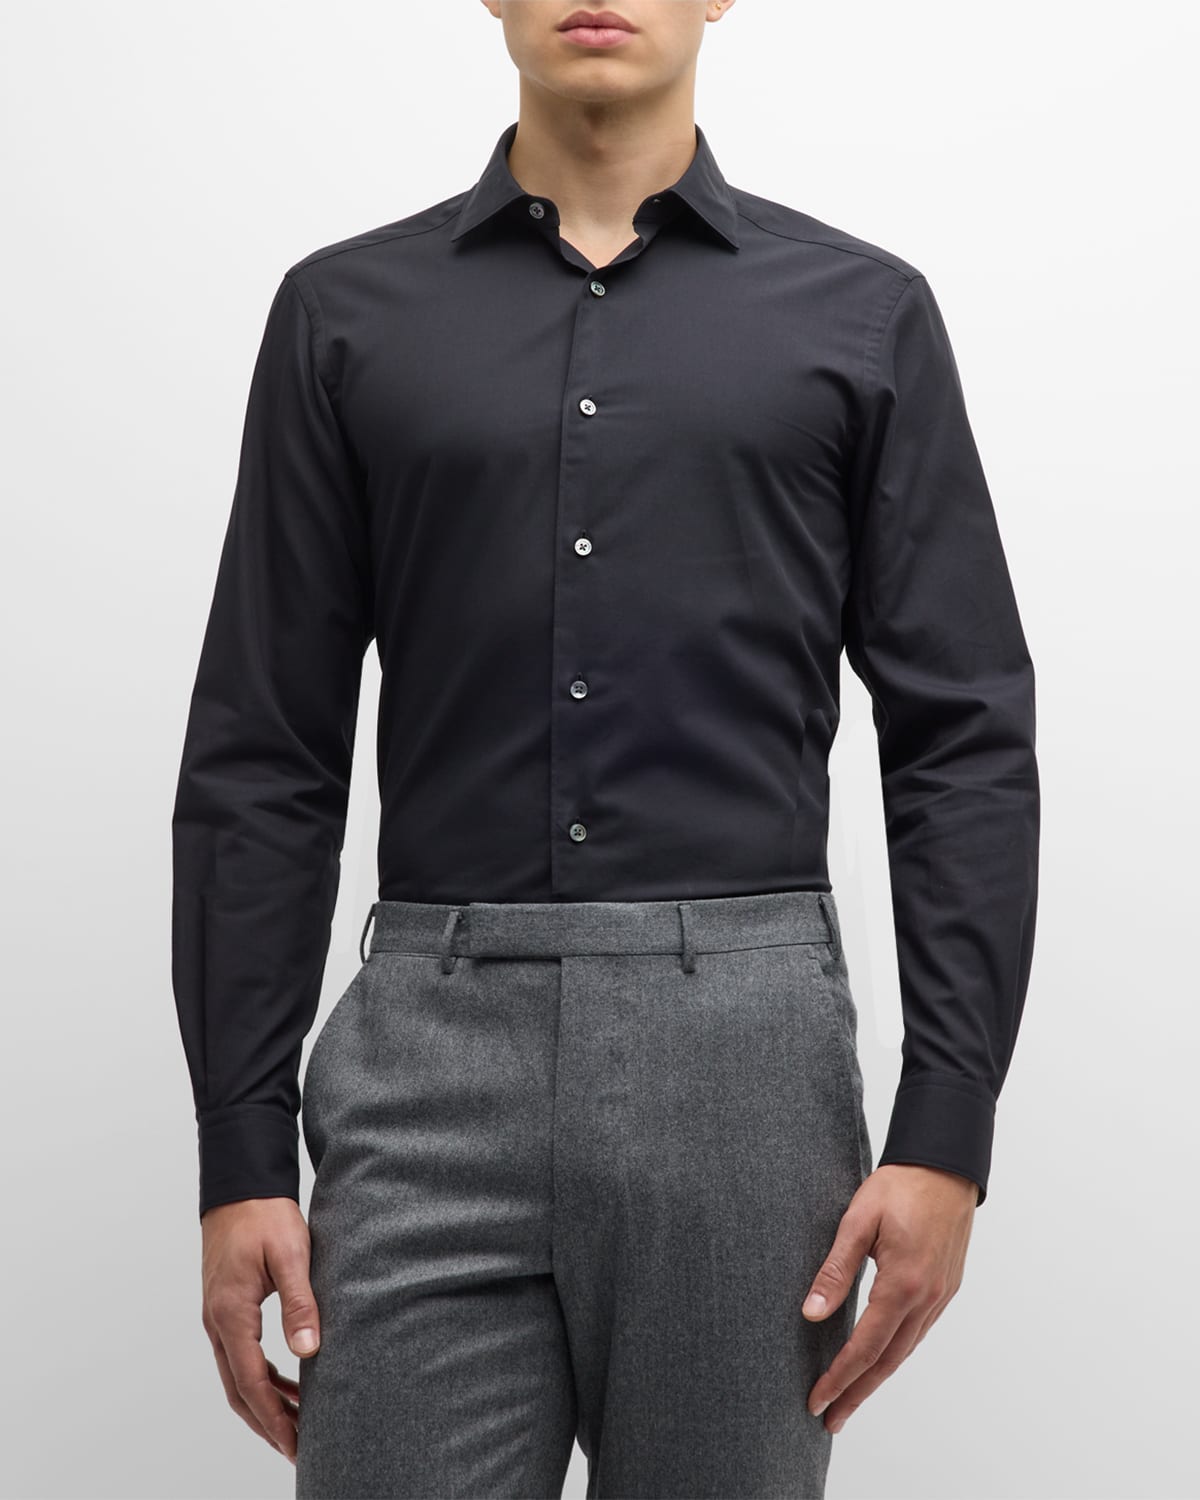 Zegna Men's Premium Cotton Sport Shirt In Black Solid